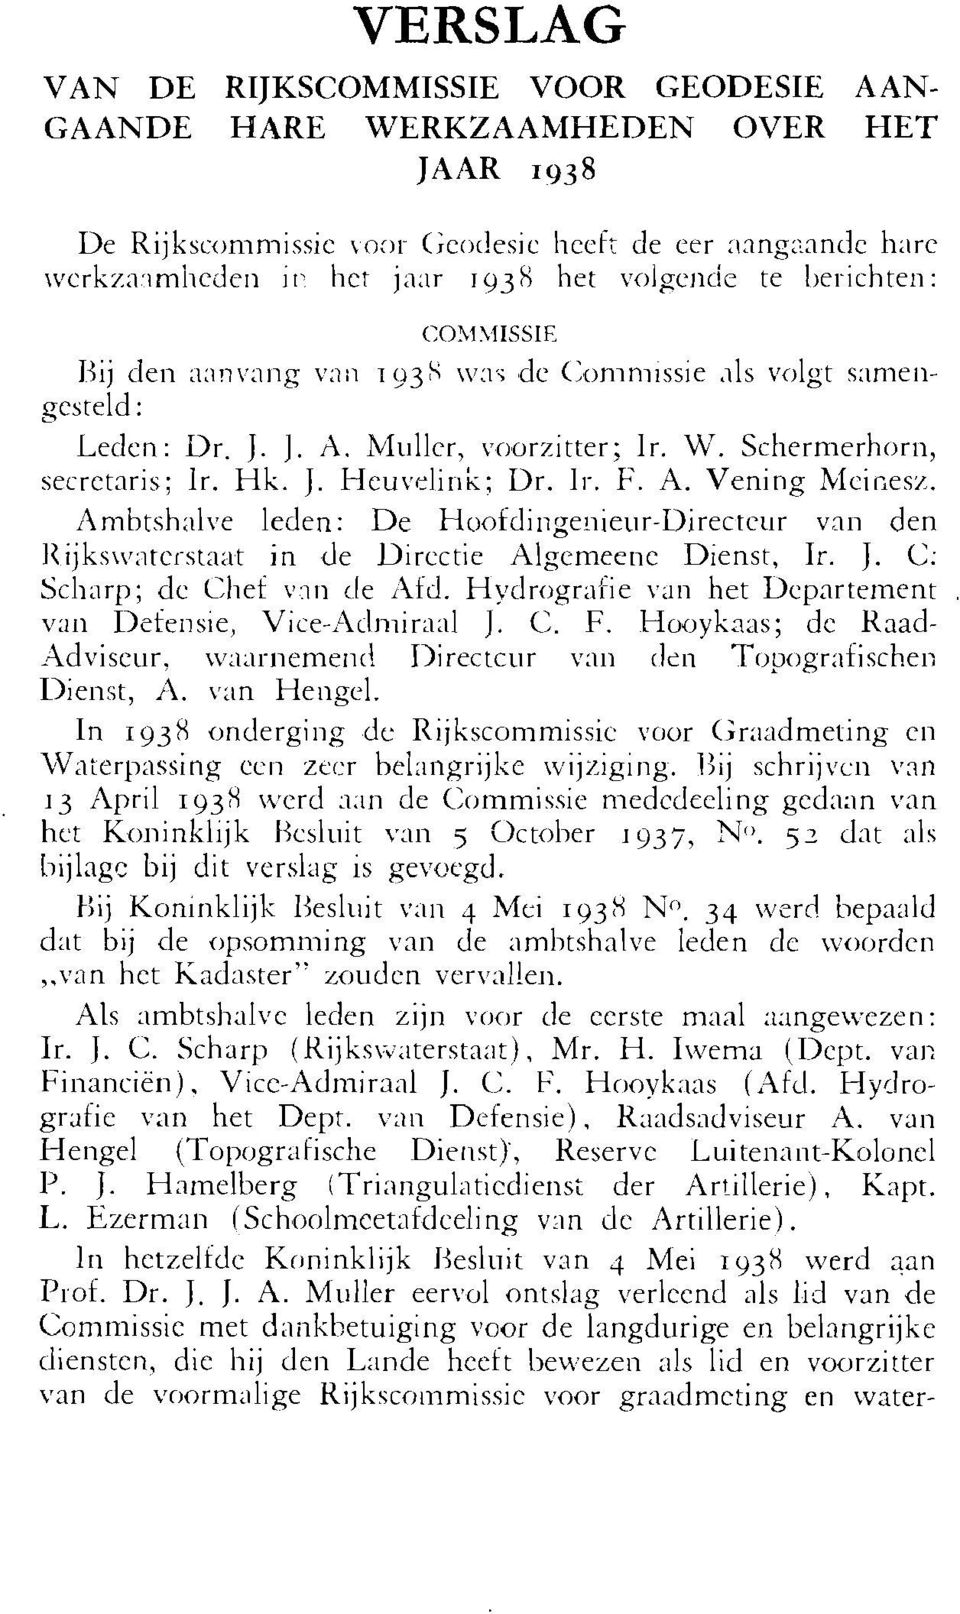 Miillcr, voorzitter; Ir. W. Schermerhorli, secretaris; Ir. Hk. J. Heuveliriii; Dr. li-. F. A. Vening hlcifiesz.